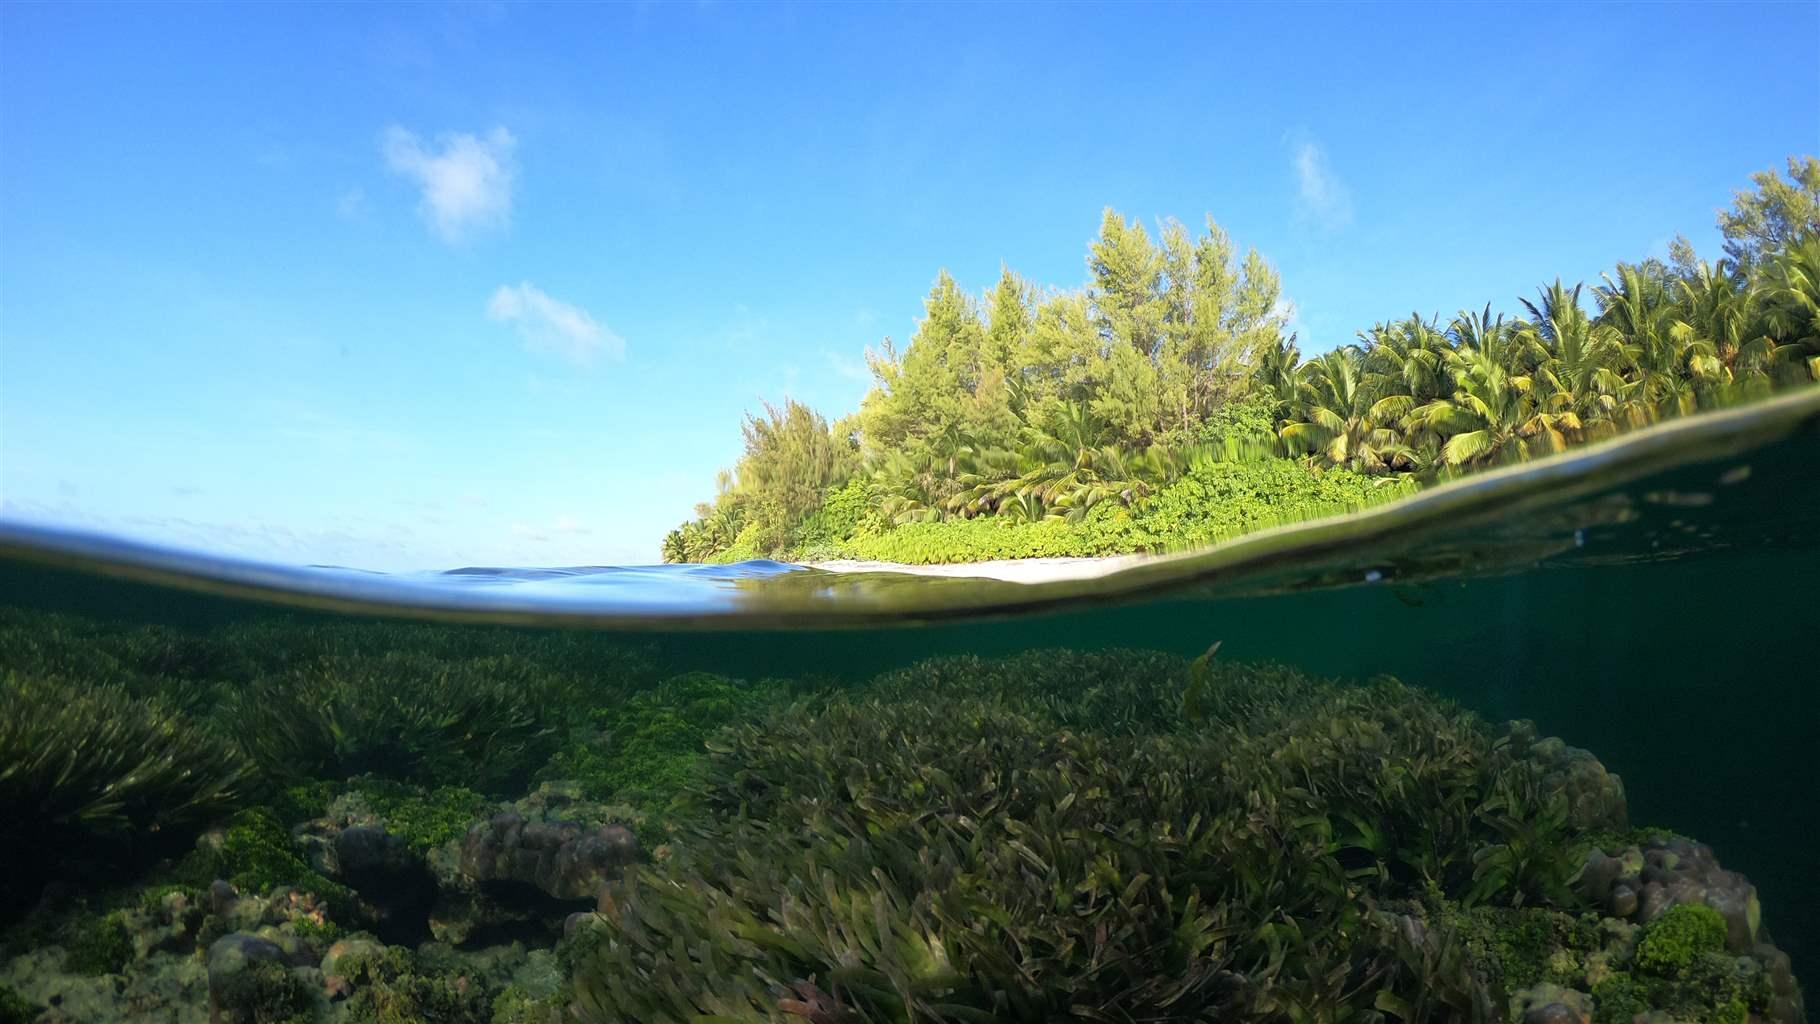 Seychelles seagrass